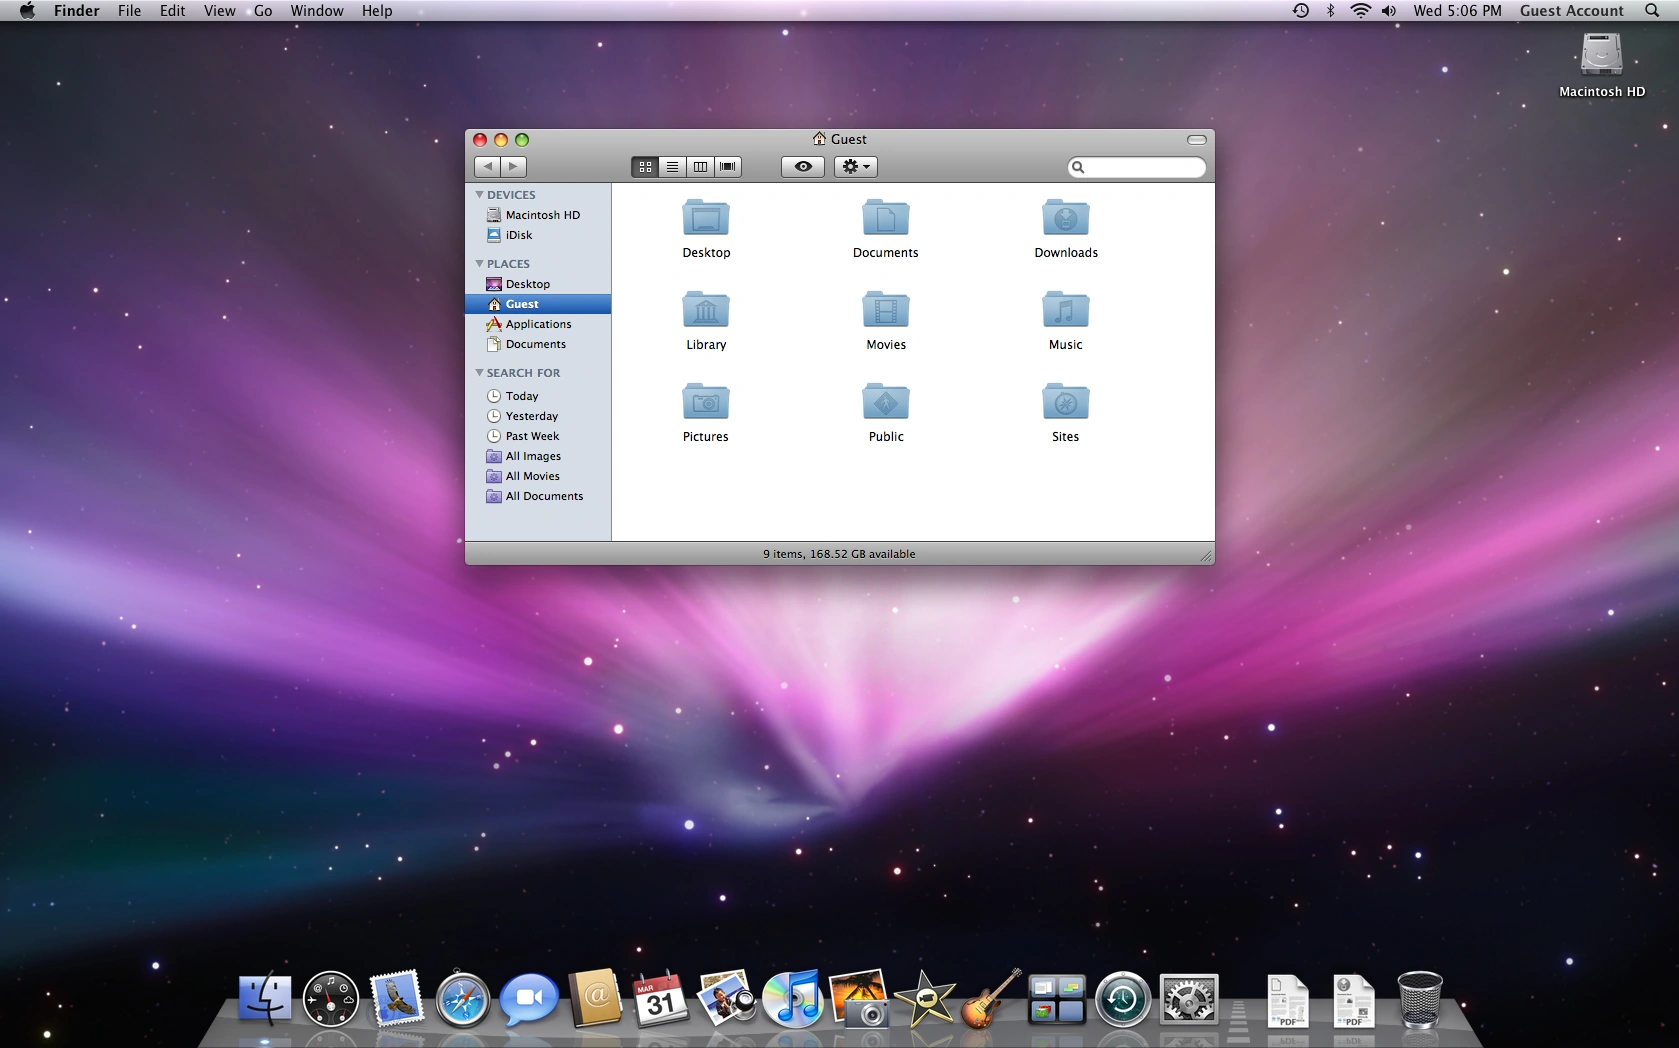 Mac OS X - Leopard (2007)